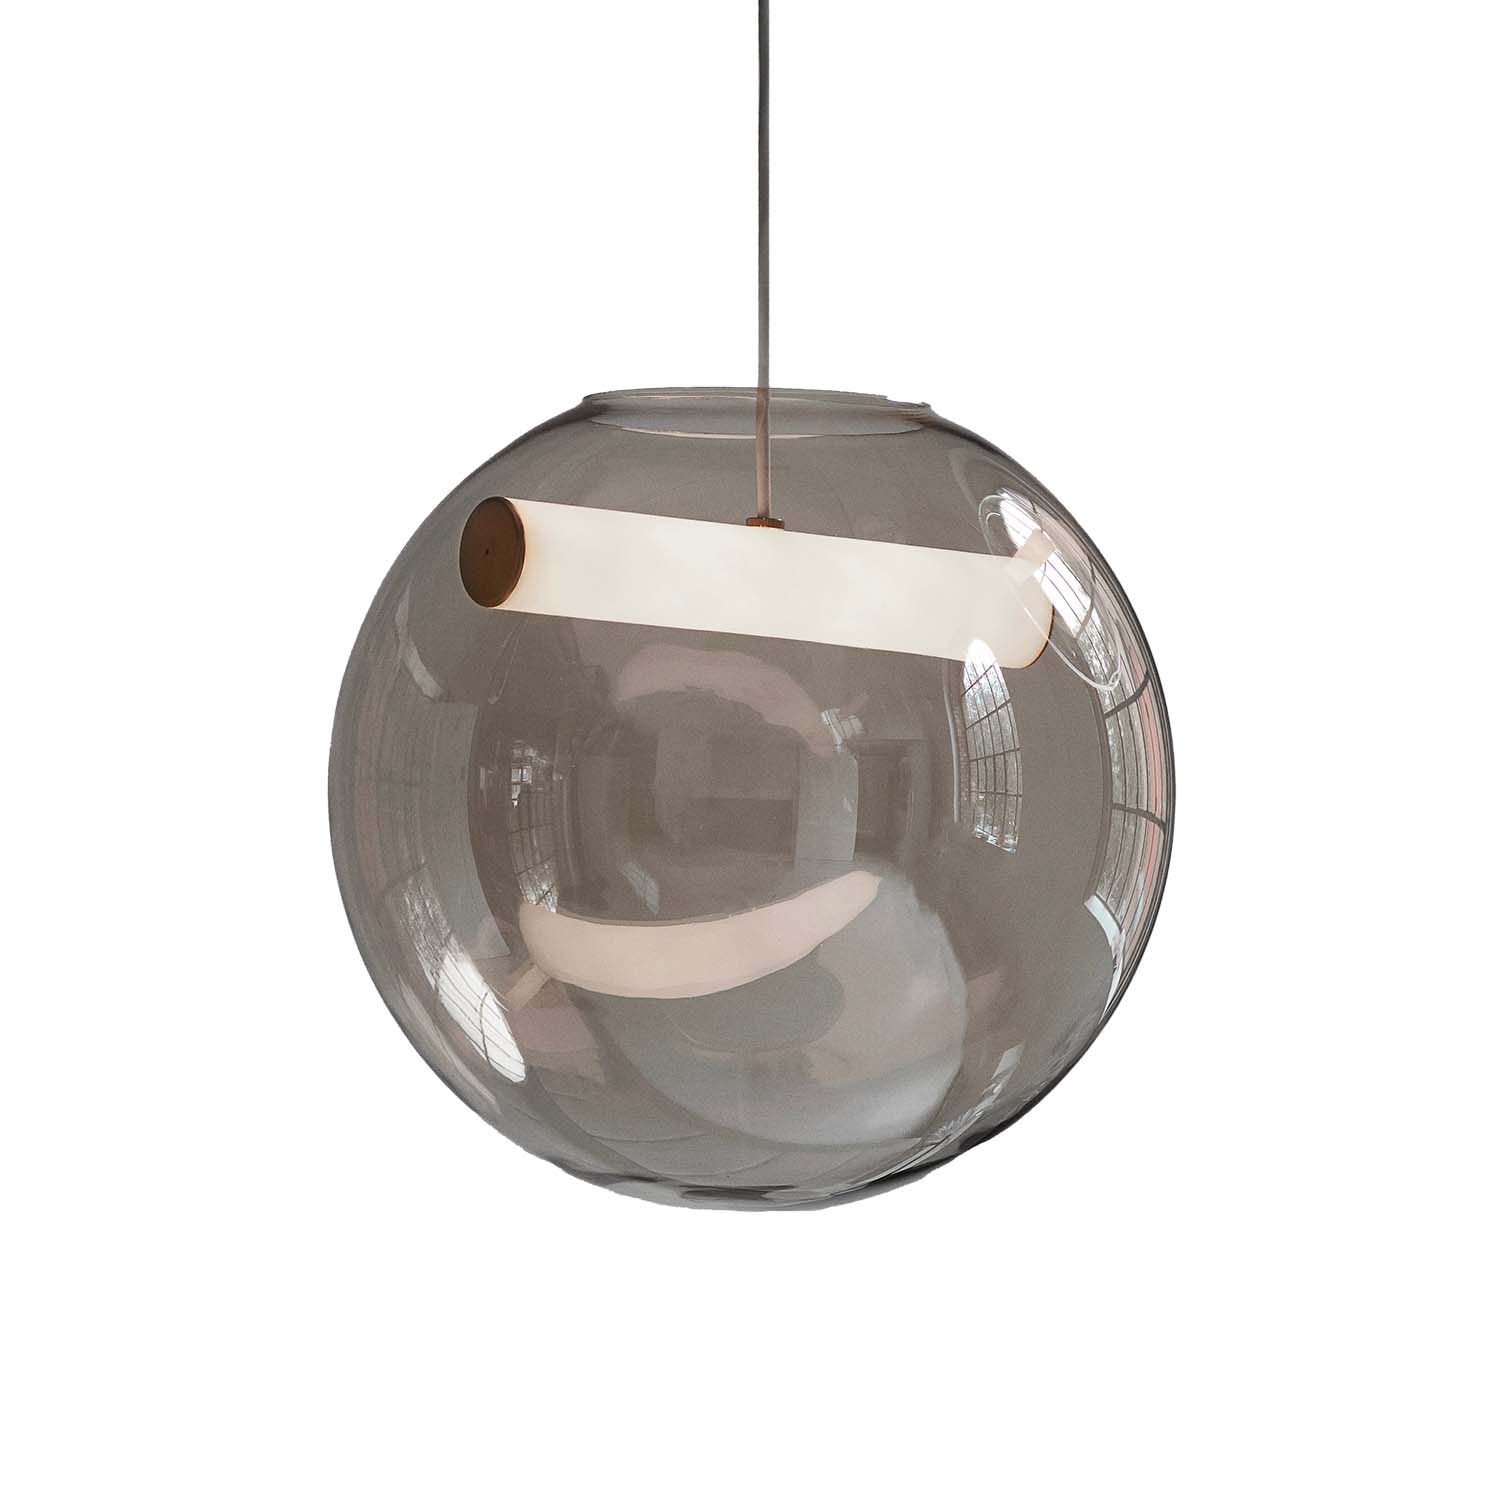 REVEAL - Smoked glass ball pendant light, integrated LED tube, Italian design